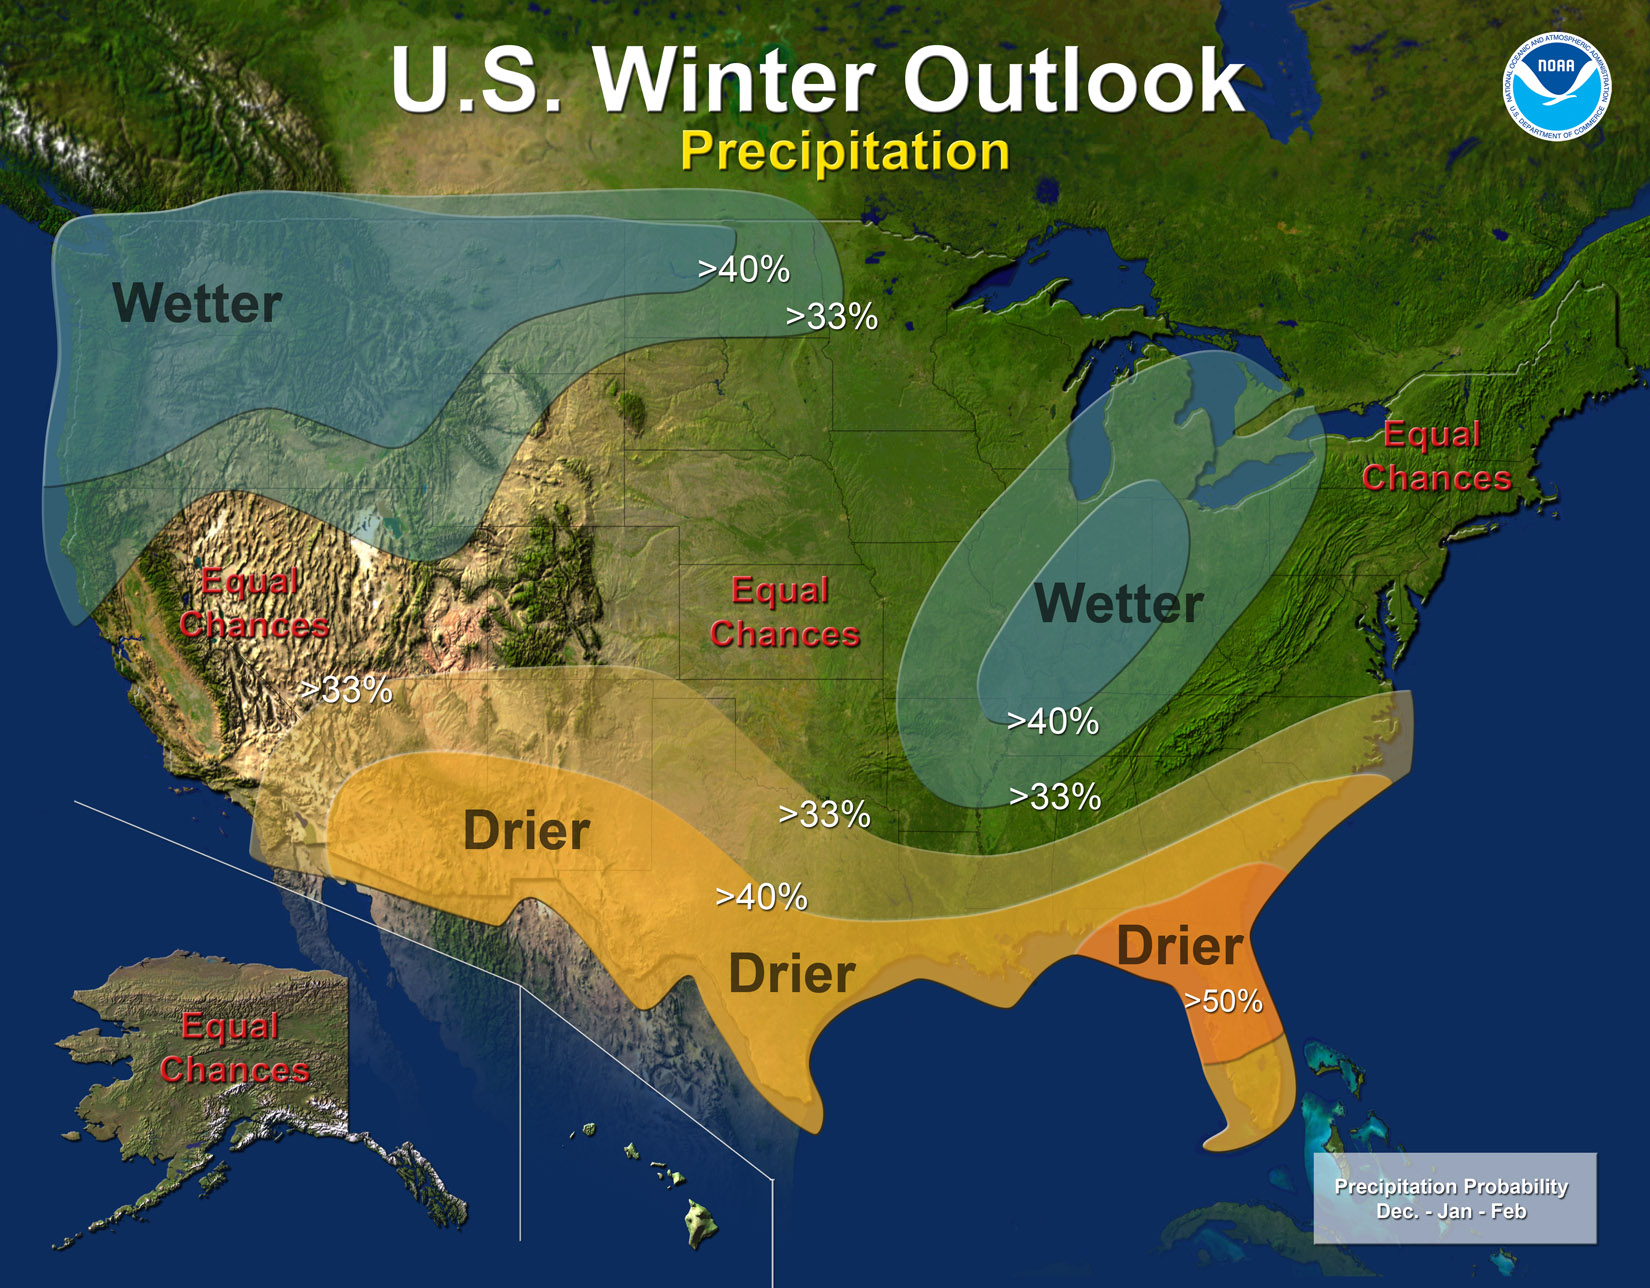 2010-2011 Winter Weather Outlook - Precipitation